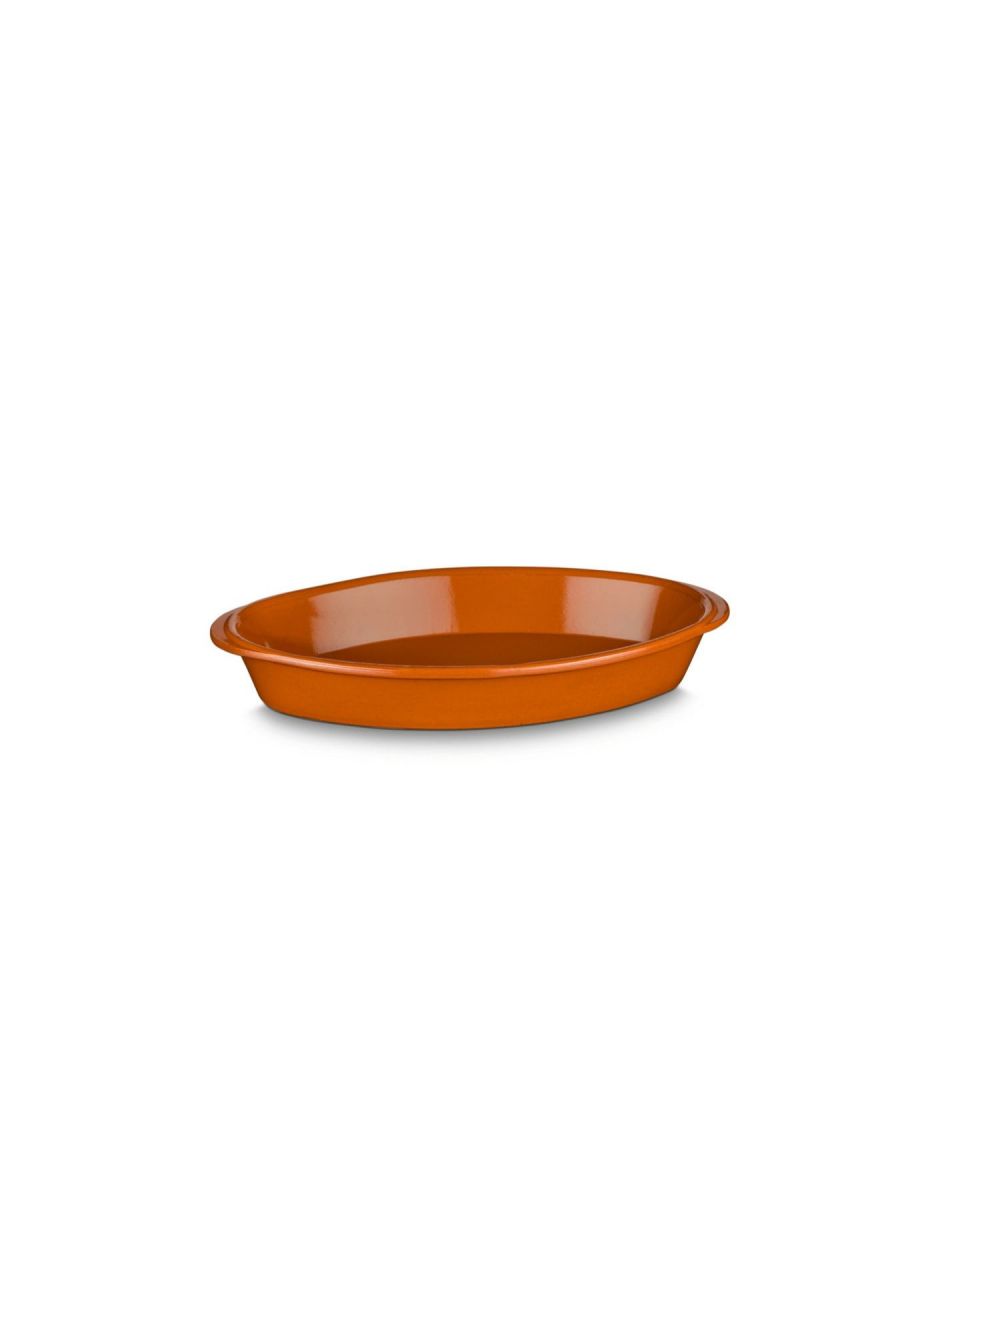 Regas Oval Dish #503 -BACPL87001